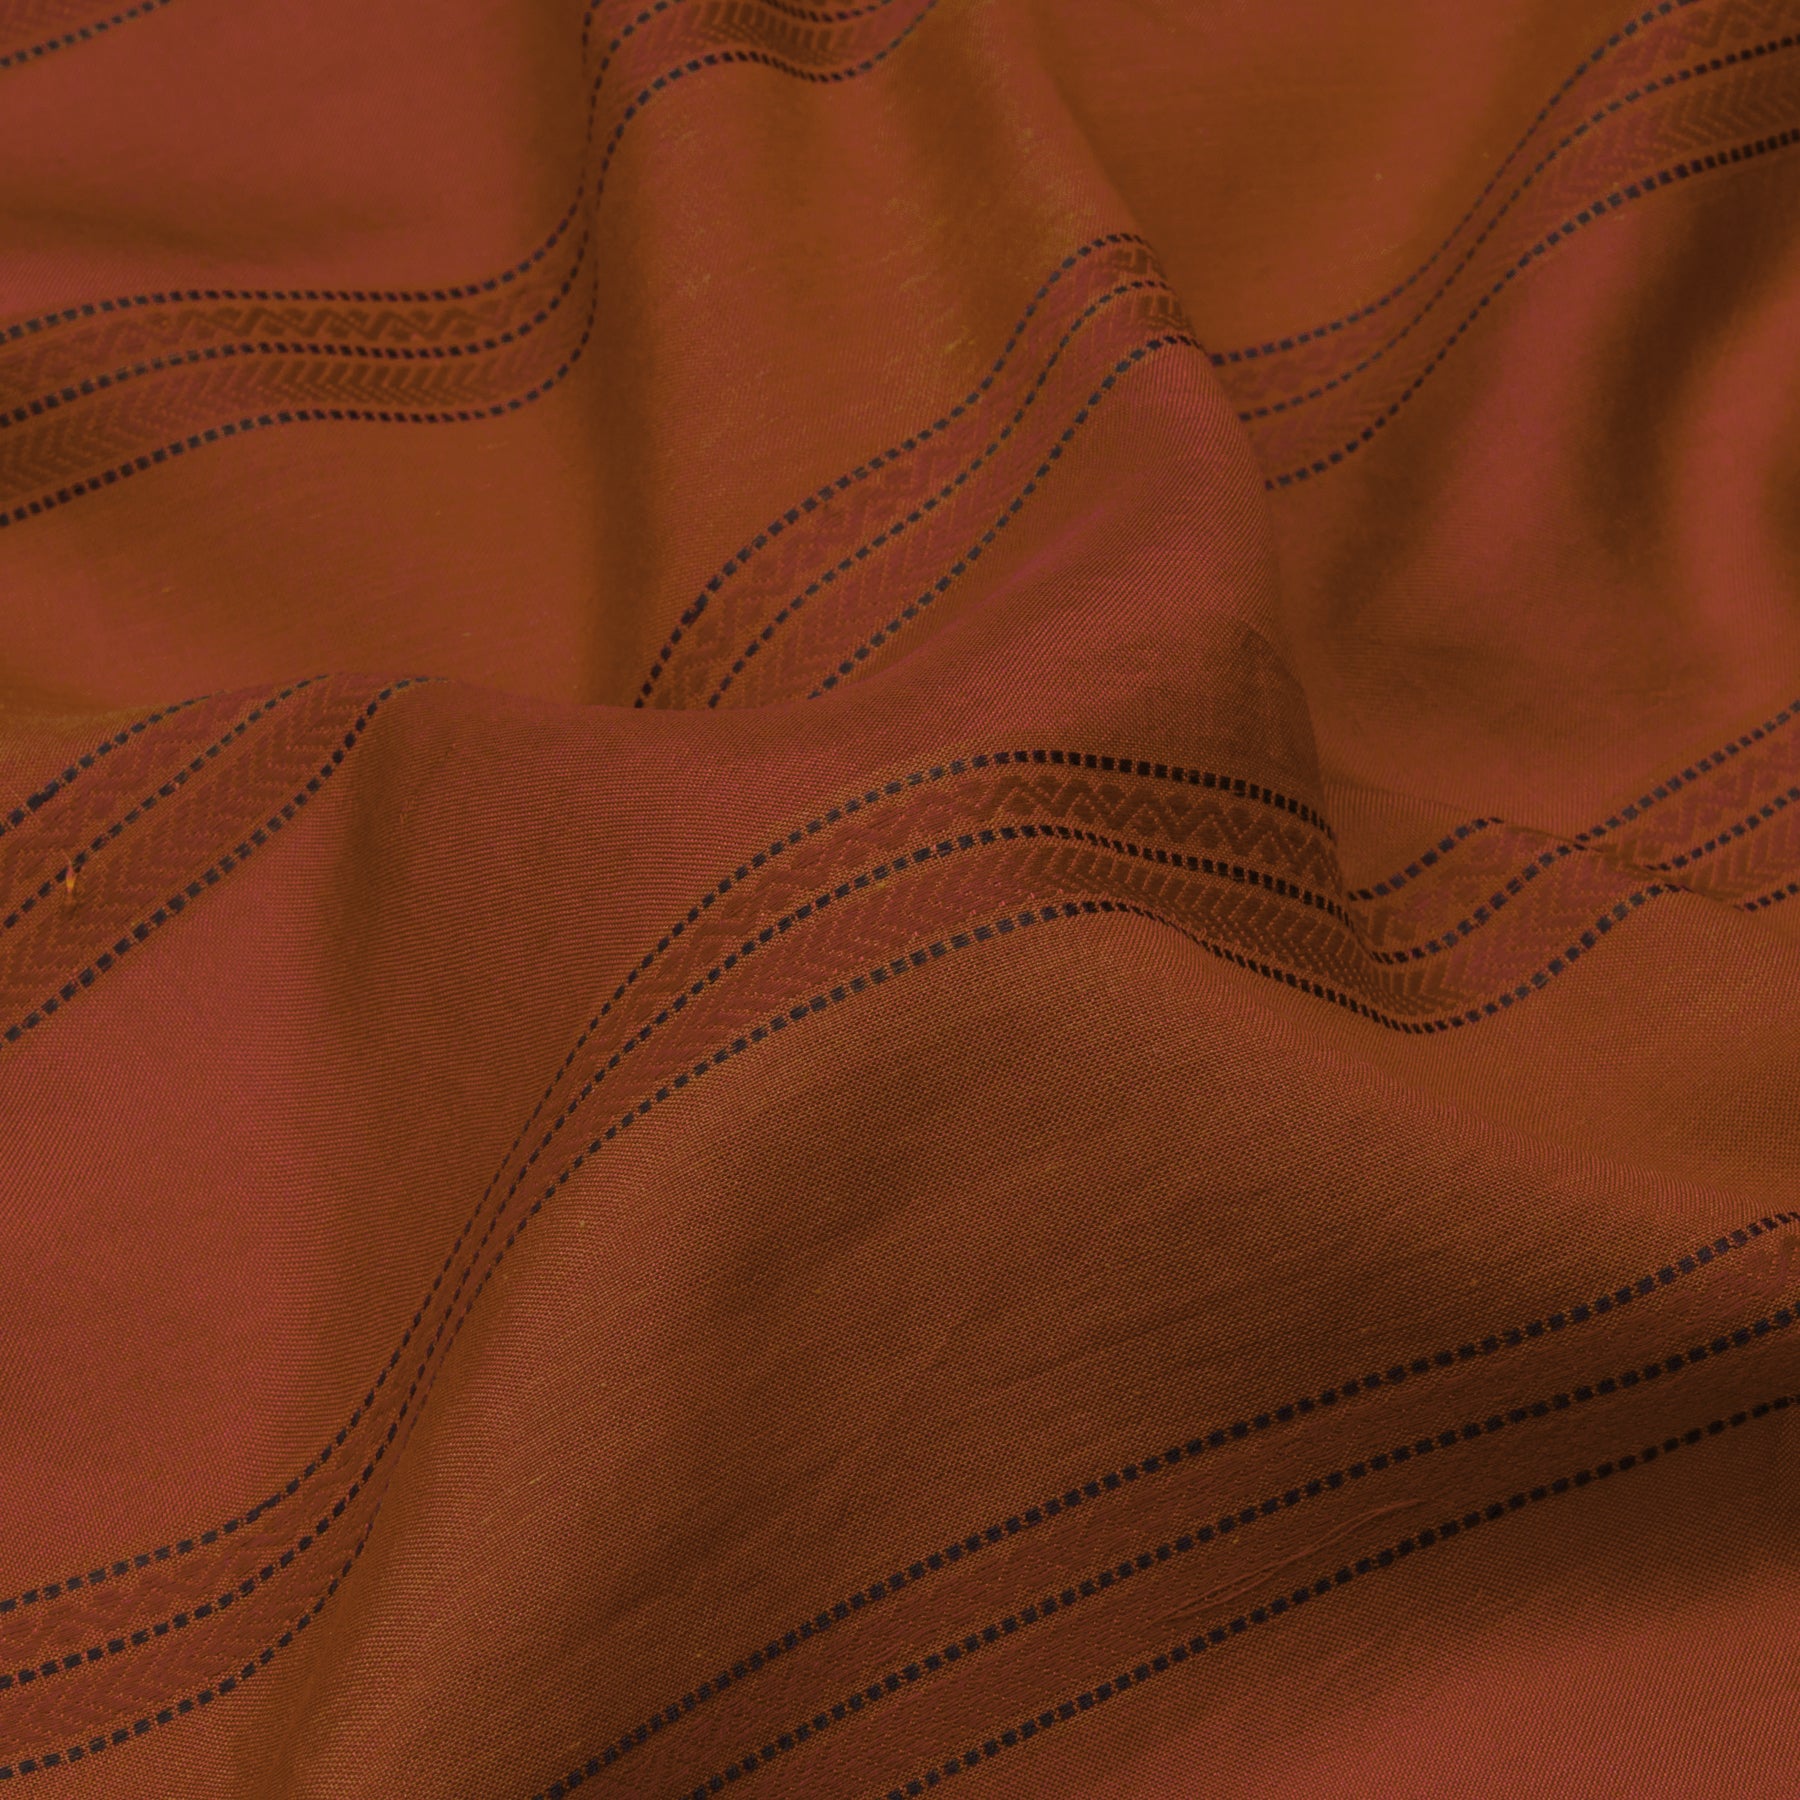 Kanakavalli Silk/Cotton Sari 21-598-HS005-09449 - Fabric View